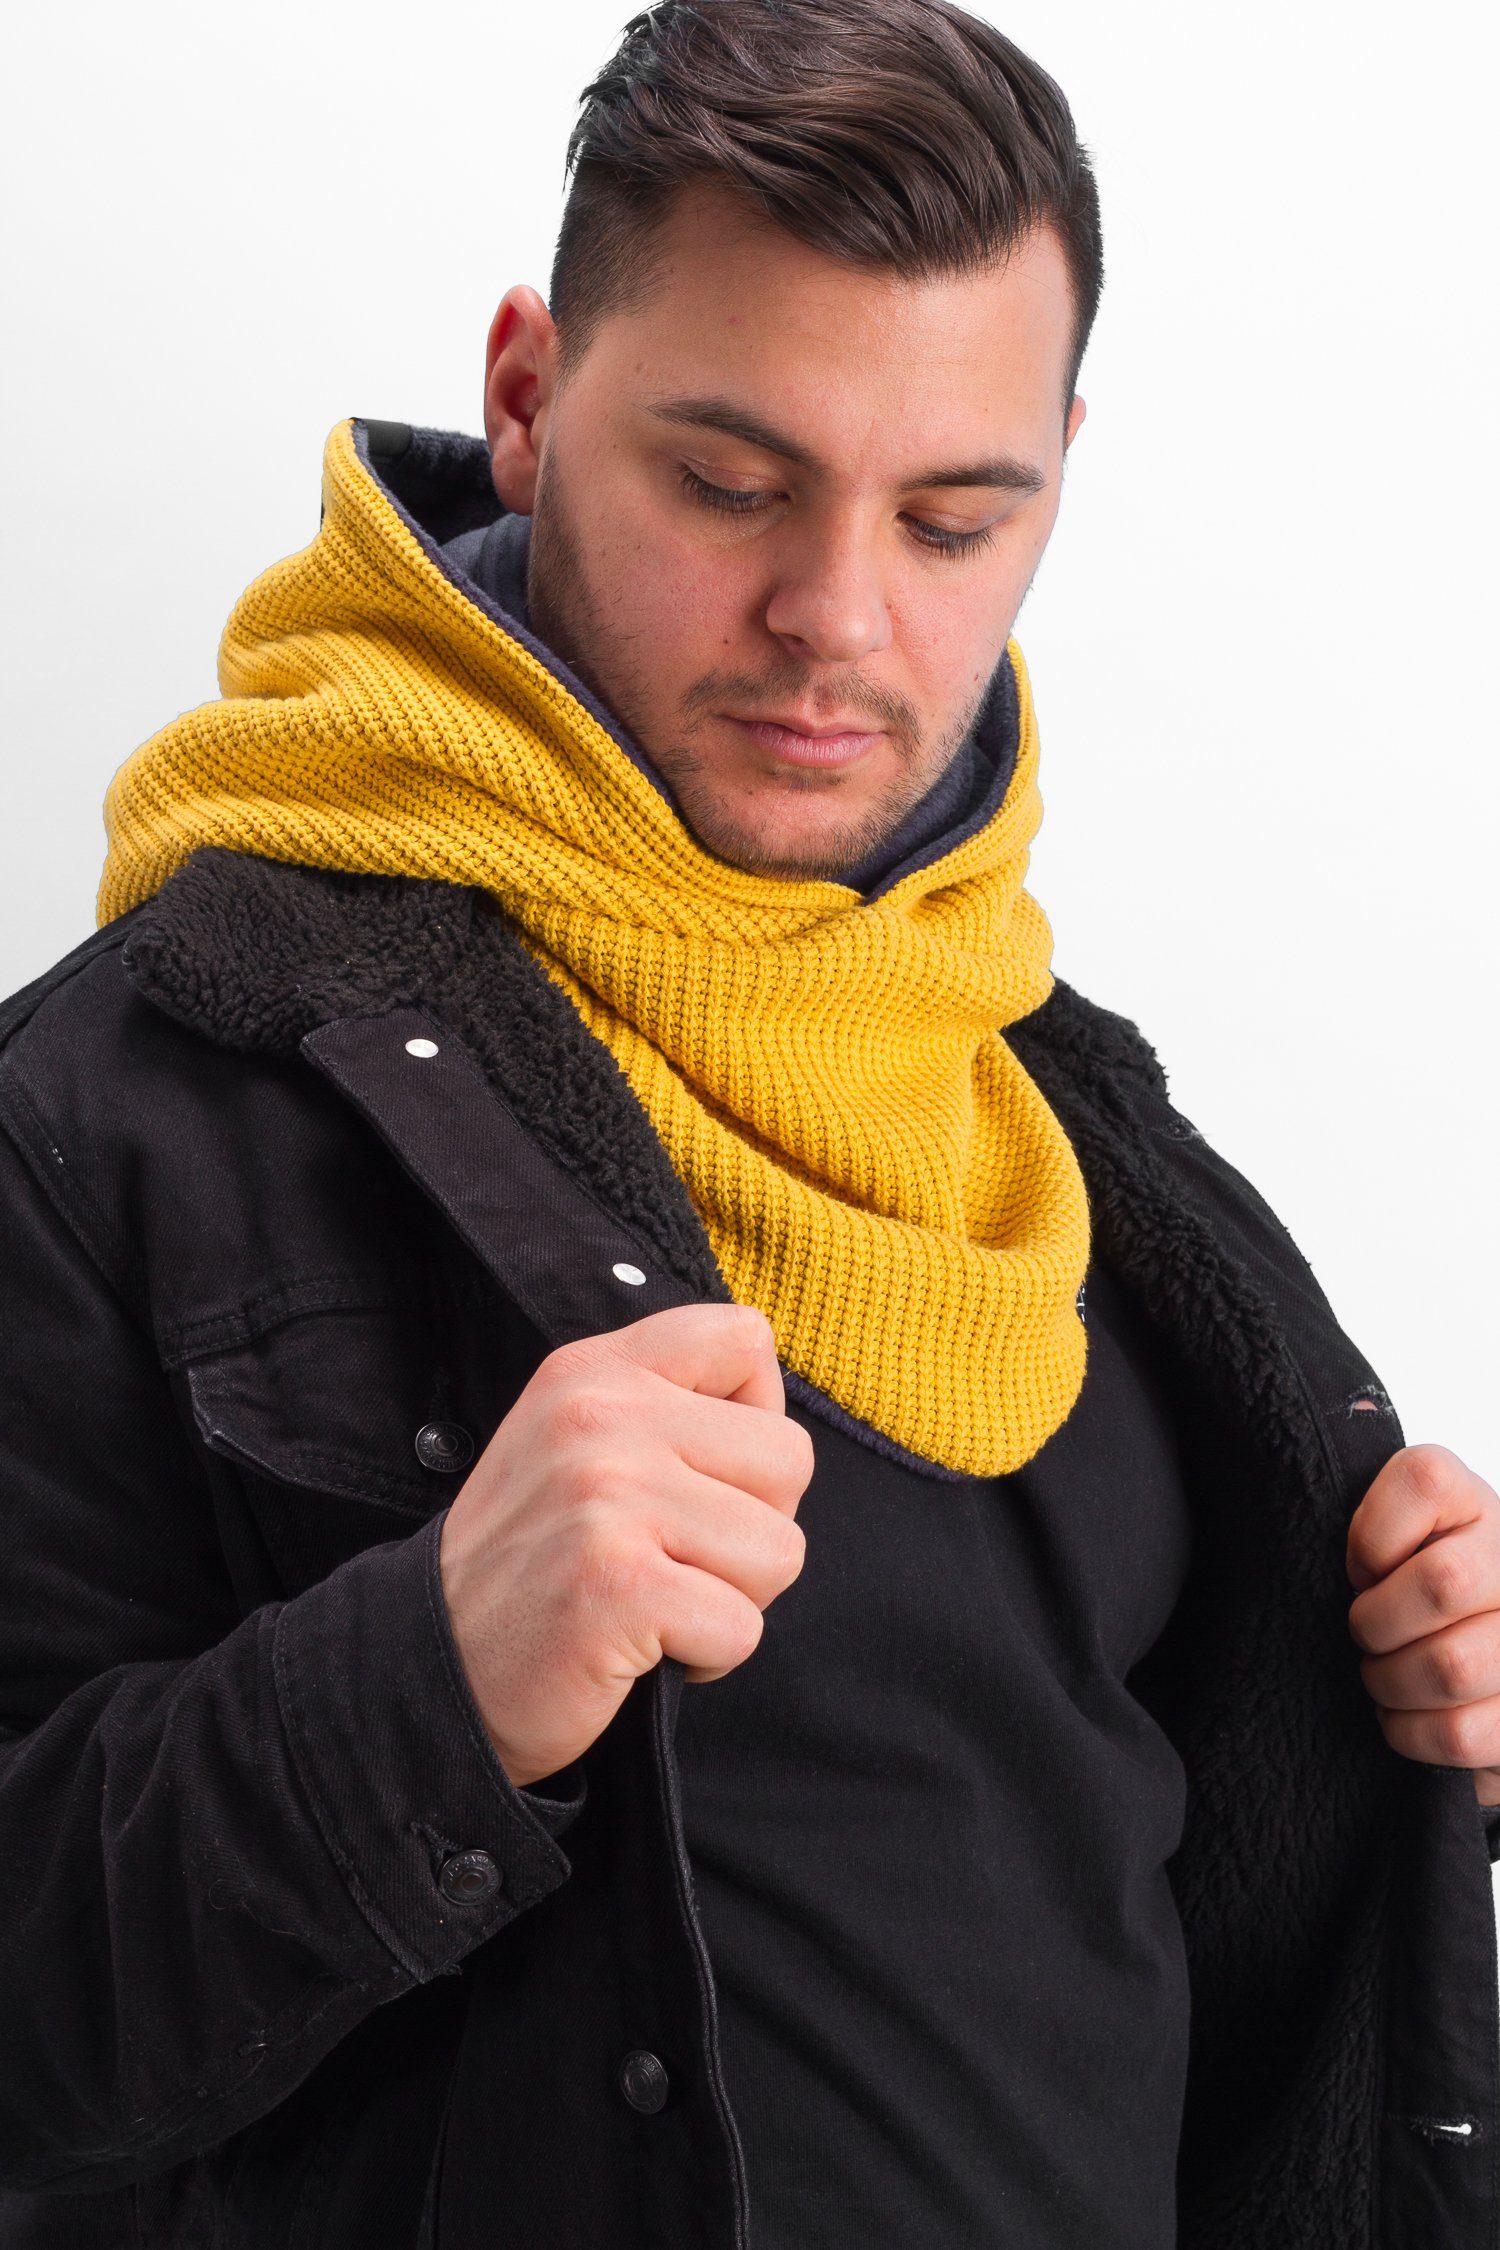 Windbreaker Modeschal - Schal, Hooded integriertem Manufaktur13 Knit Loop Mustard Strickschal, Kapuzenschal, mit